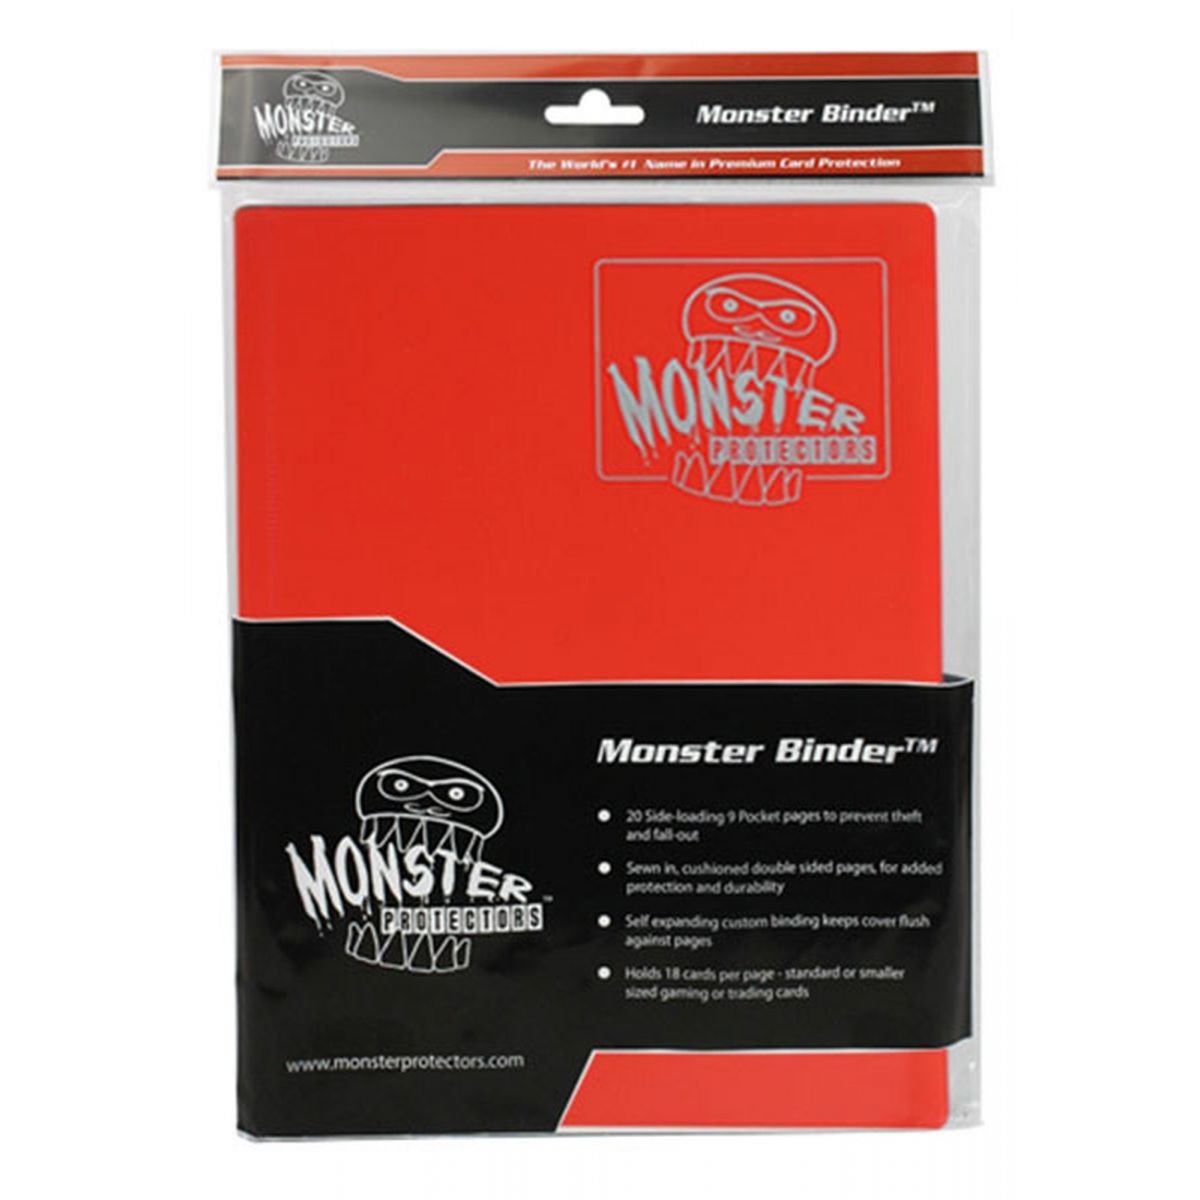 Monster - Ordner - 9-Pocket Mattrot - Mattrot - 160 Steckplätze